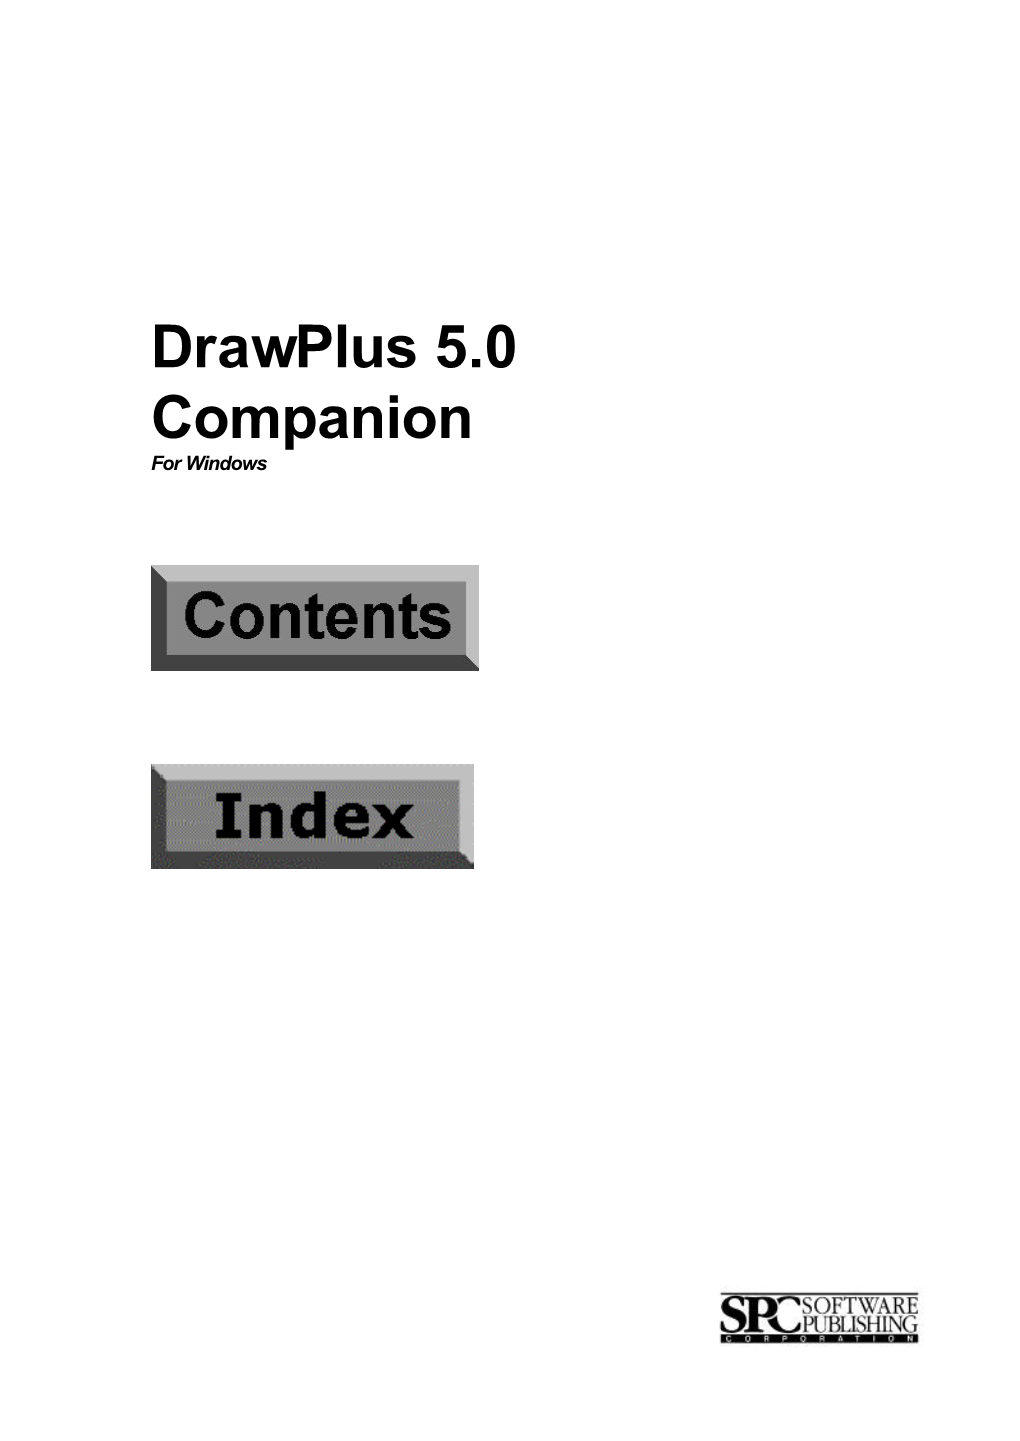 Drawplus 5.0 Companion for Windows